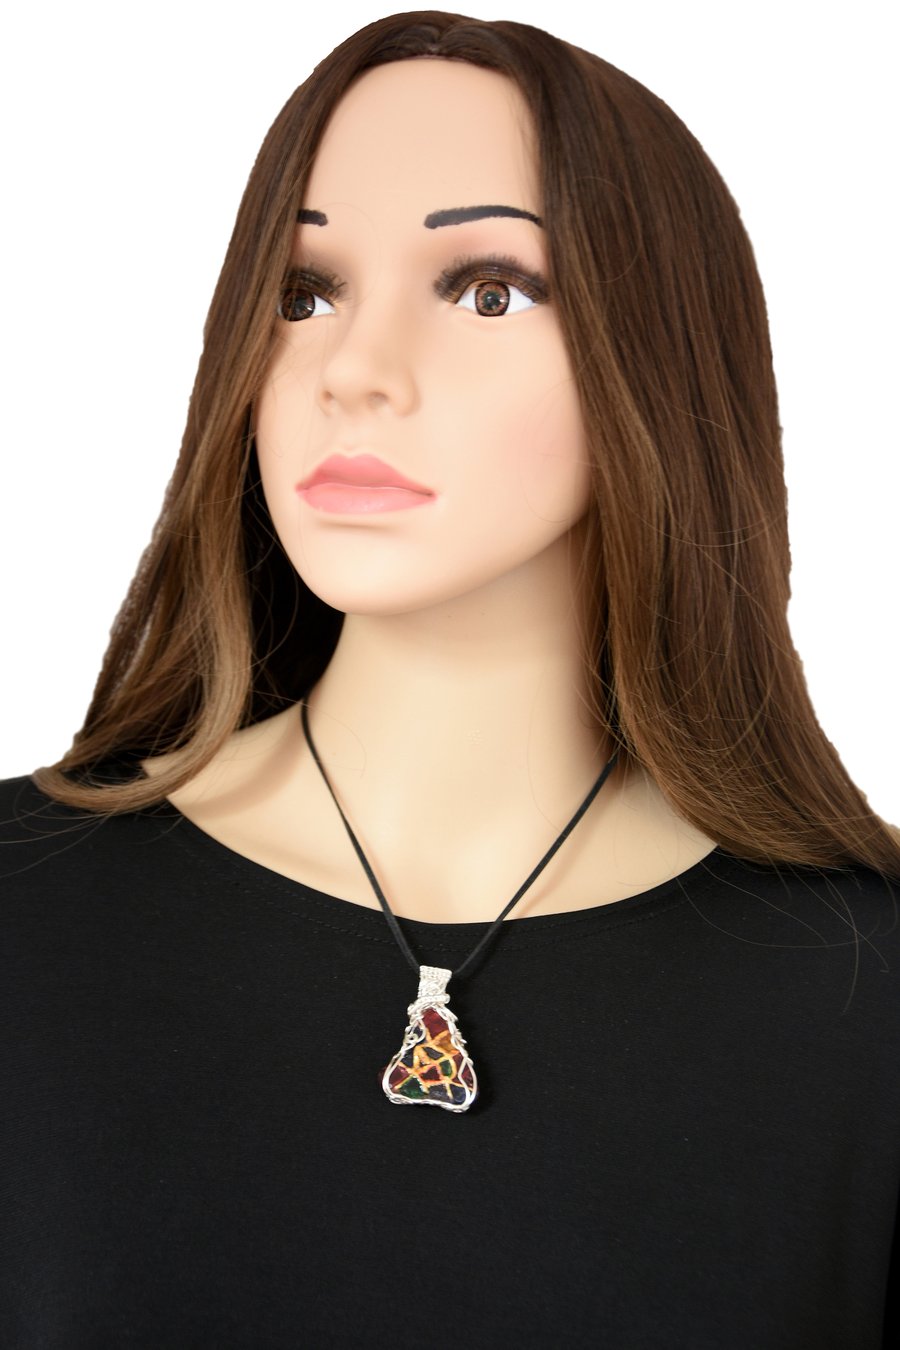 Gaudi inspired pendants; multi coloured sea glass pendant